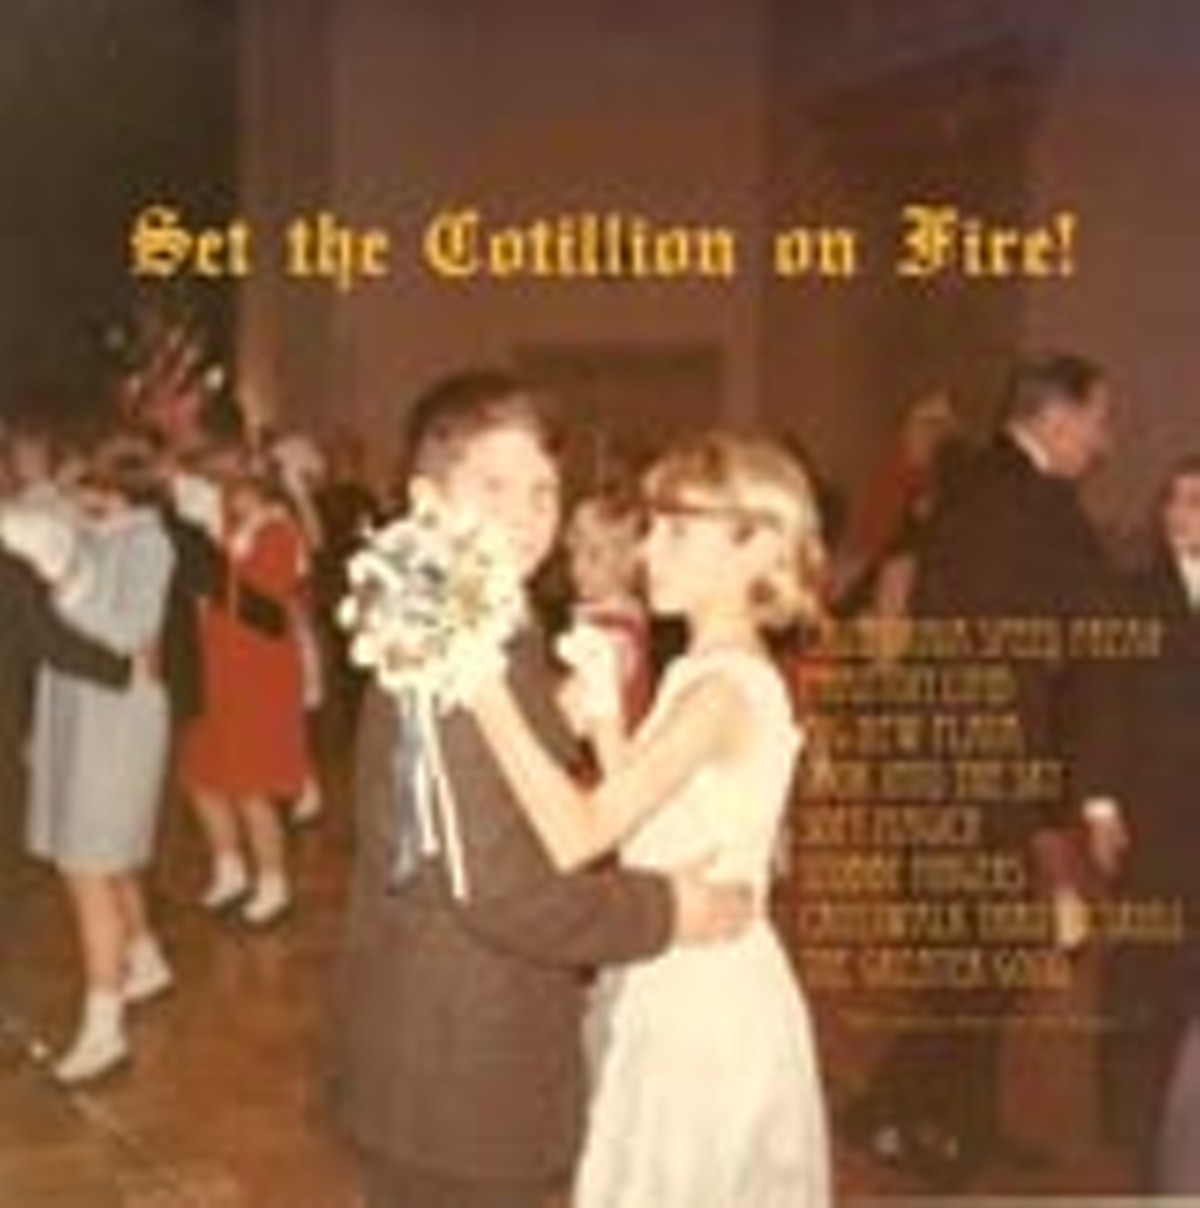 Set the Cotillion on Fire!